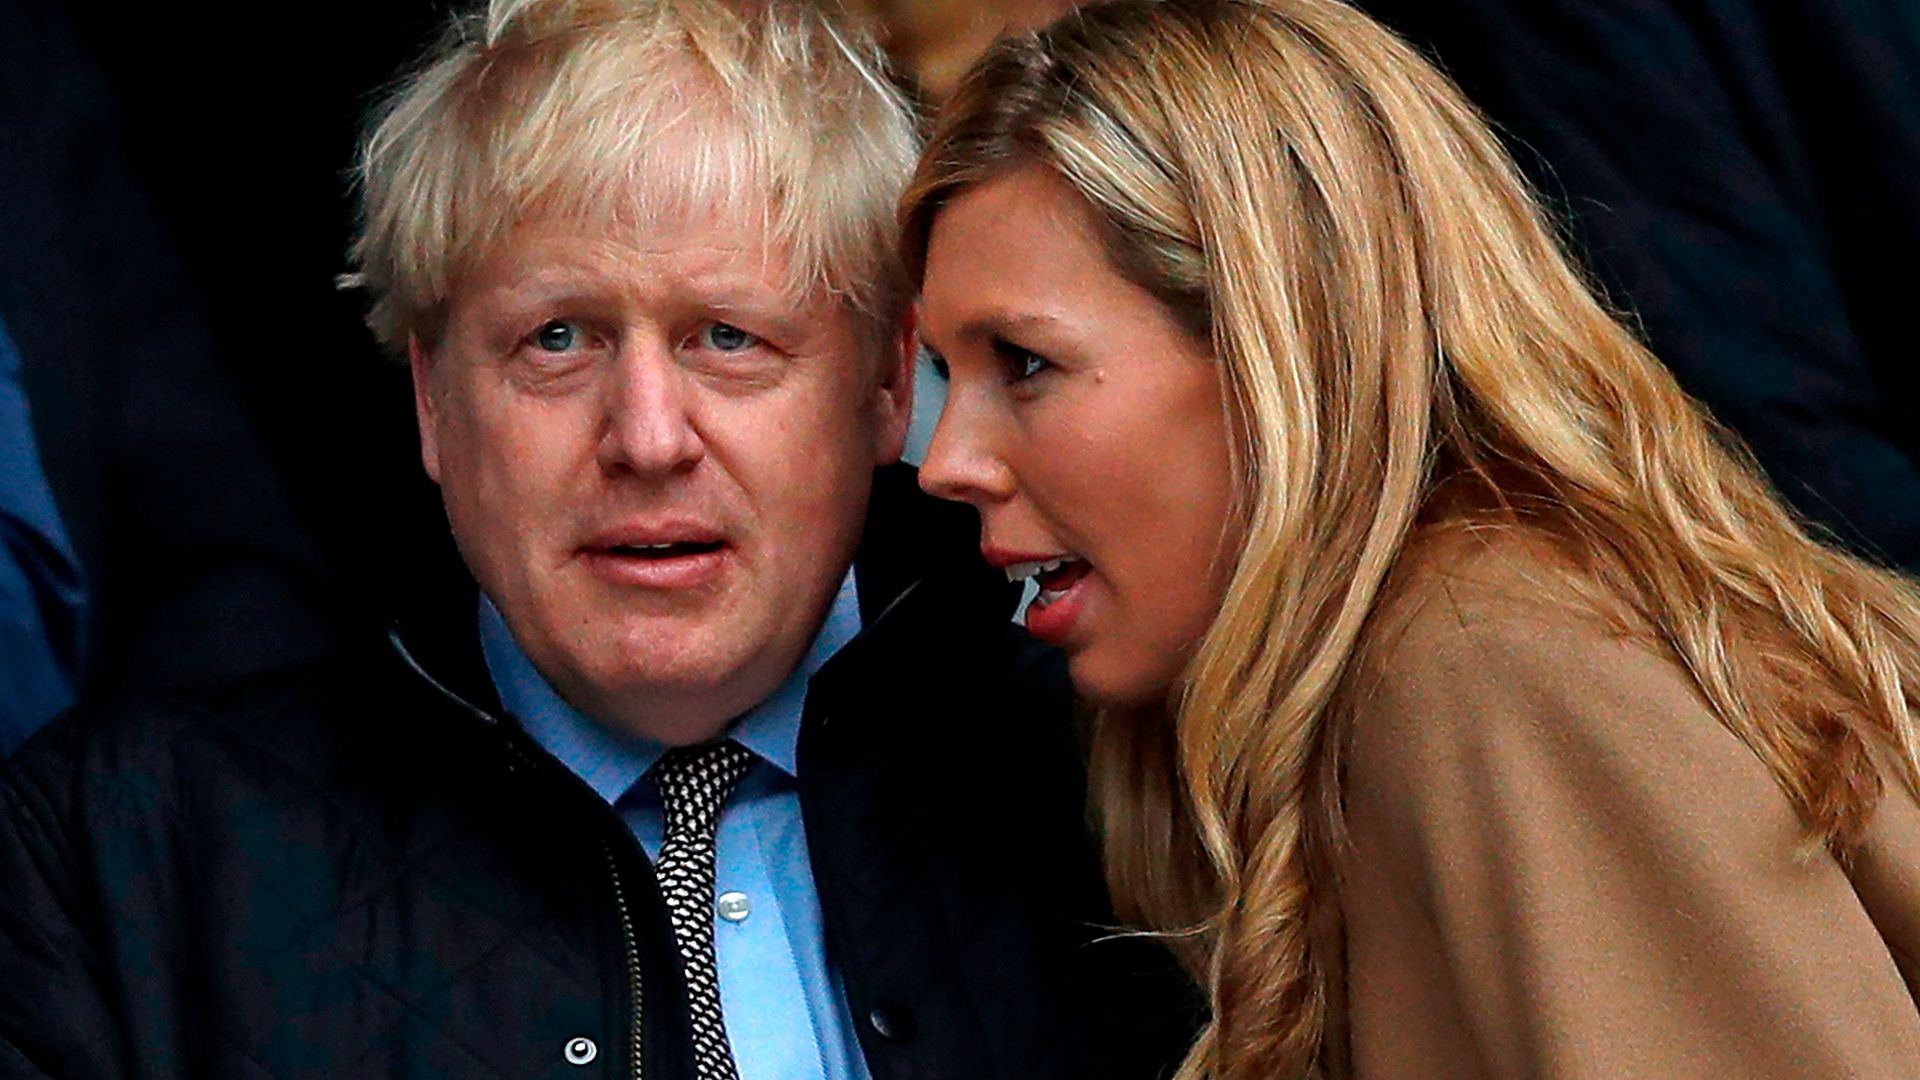 Boris Johnson with his partner Carrie Symonds (R) - Credit: AFP via Getty Images